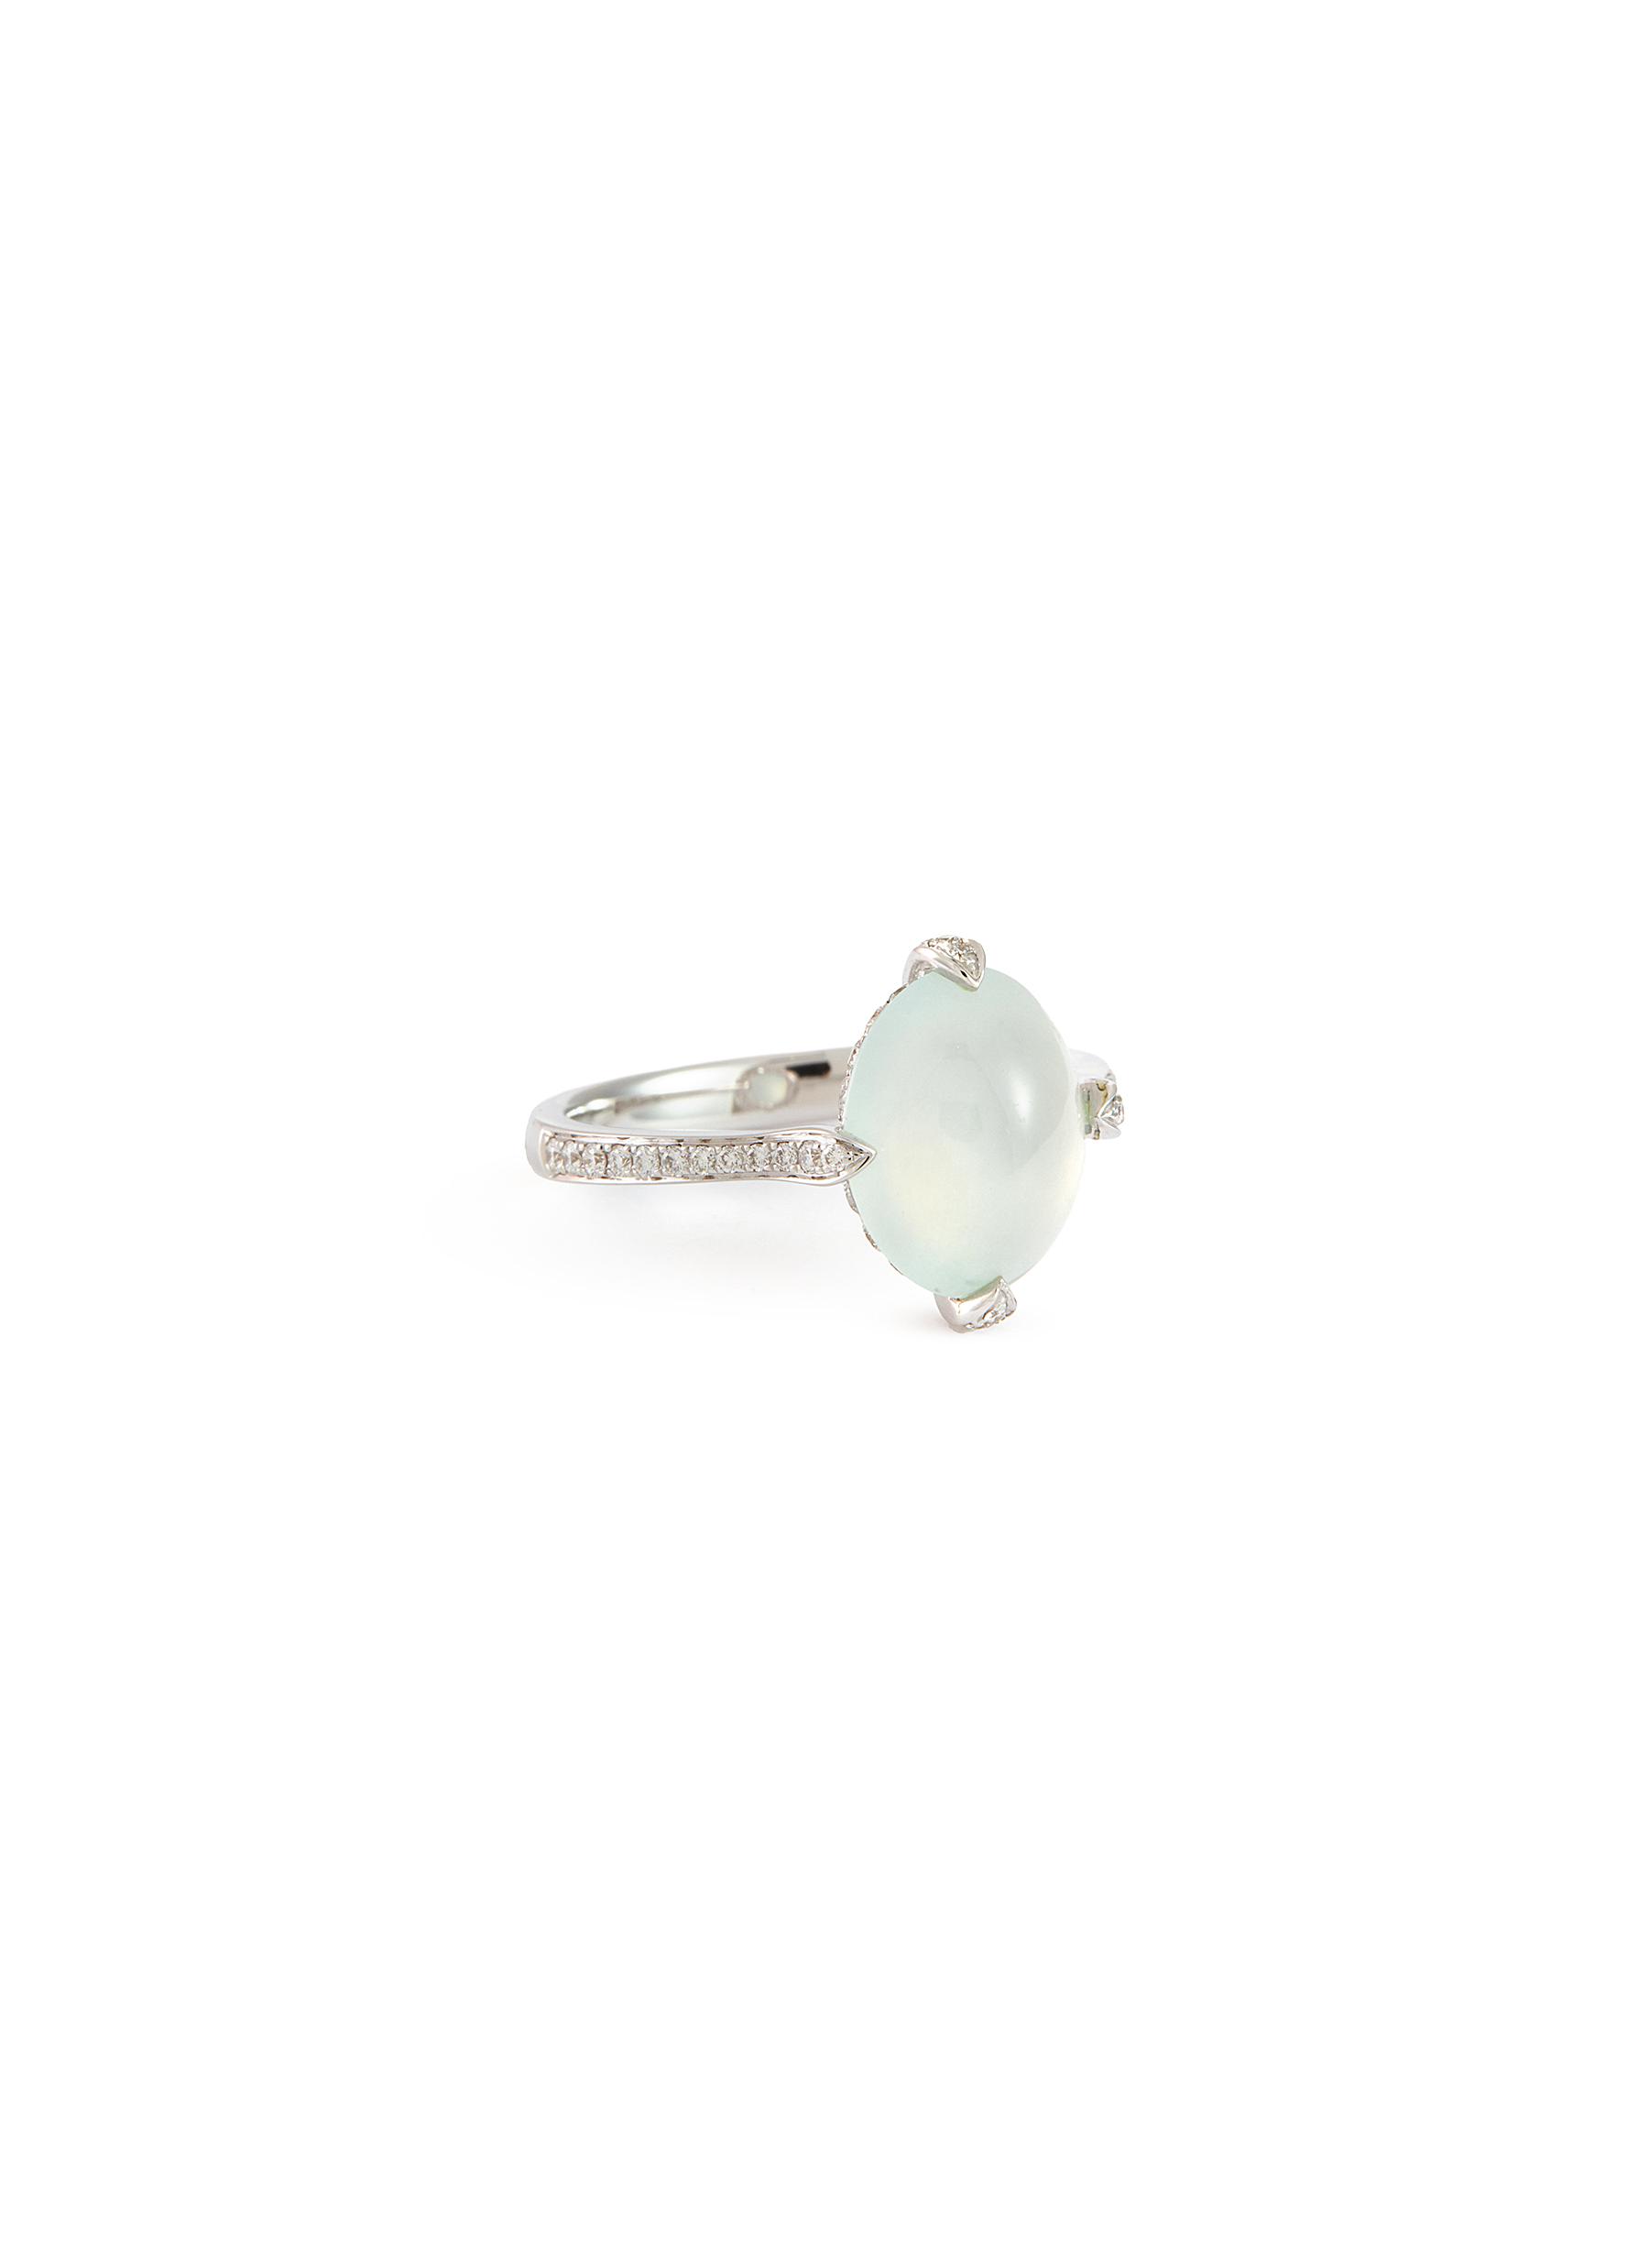 Diamond “Love” at Sotheby's Hong Kong – Reis-Nichols Jewelers